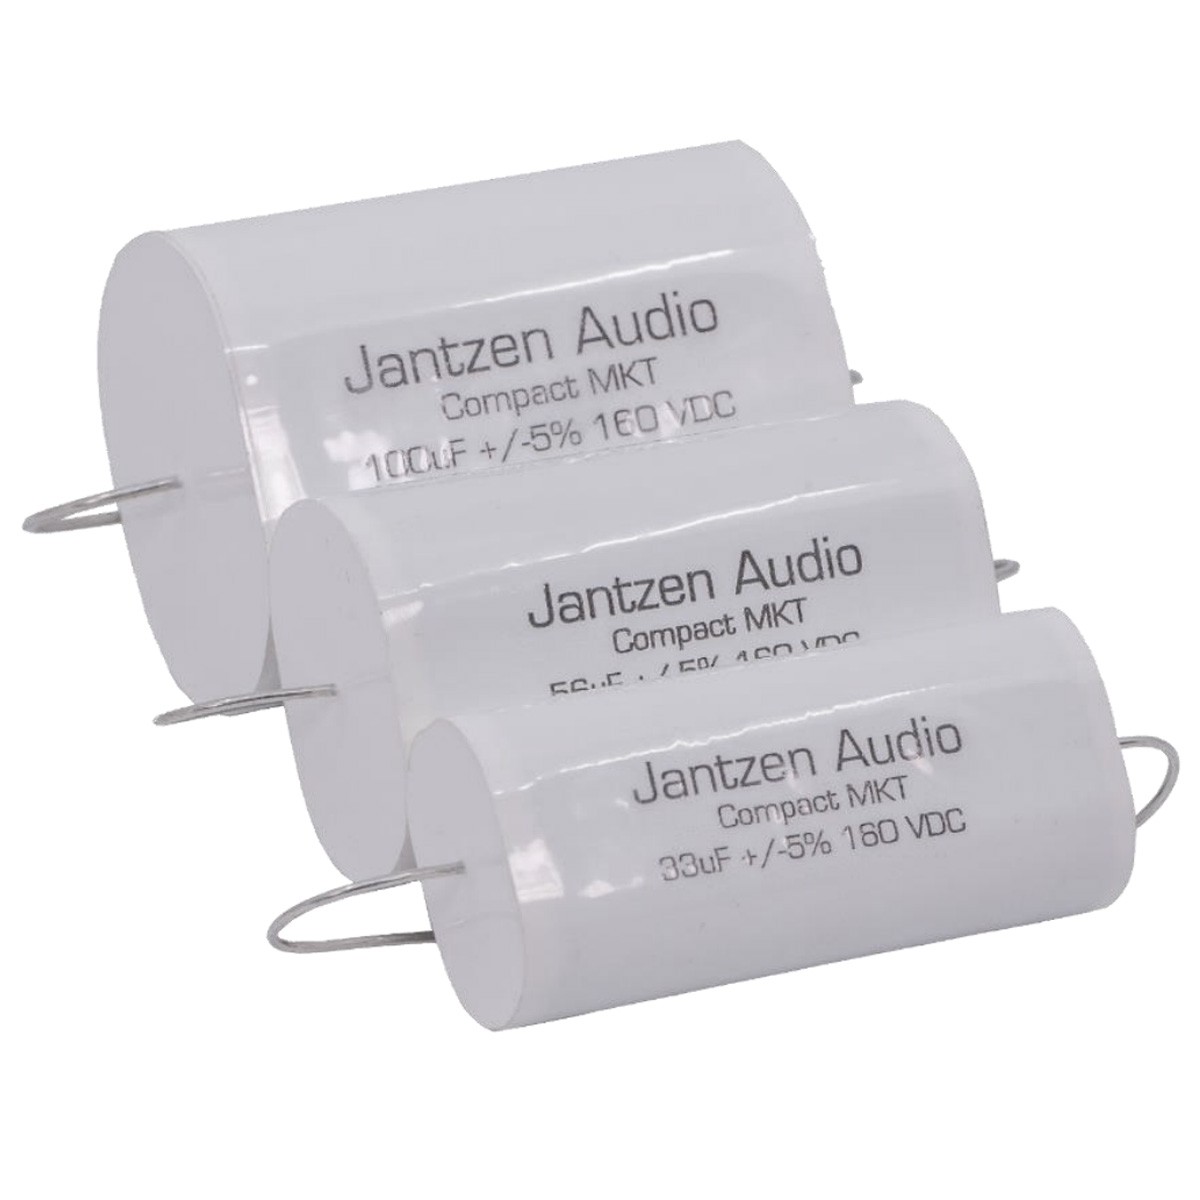 JANTZEN AUDIO COMPACT MKT 001-8120 Condensateur MKT Axial 160V 15µF